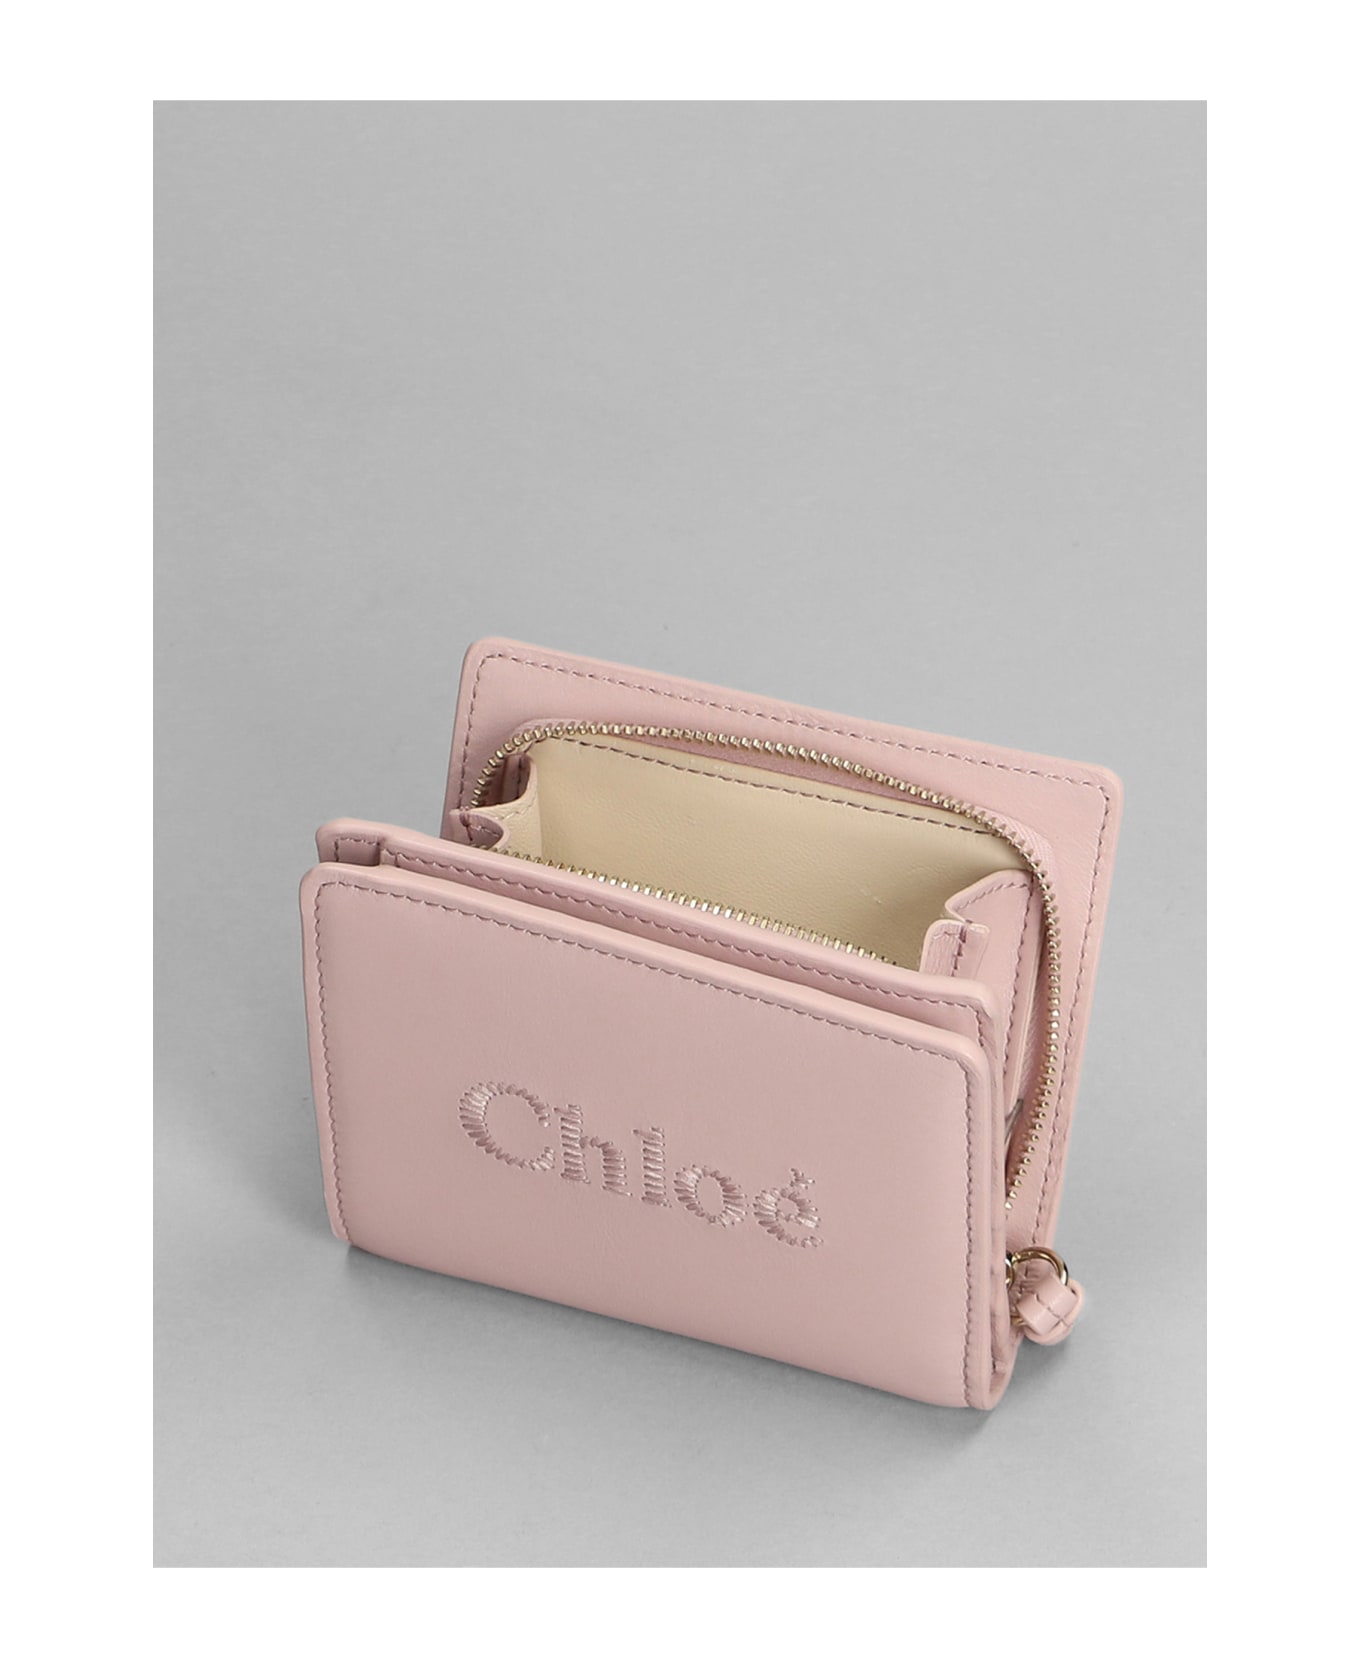 Chloé Sense Wallet In Viola Leather - Viola